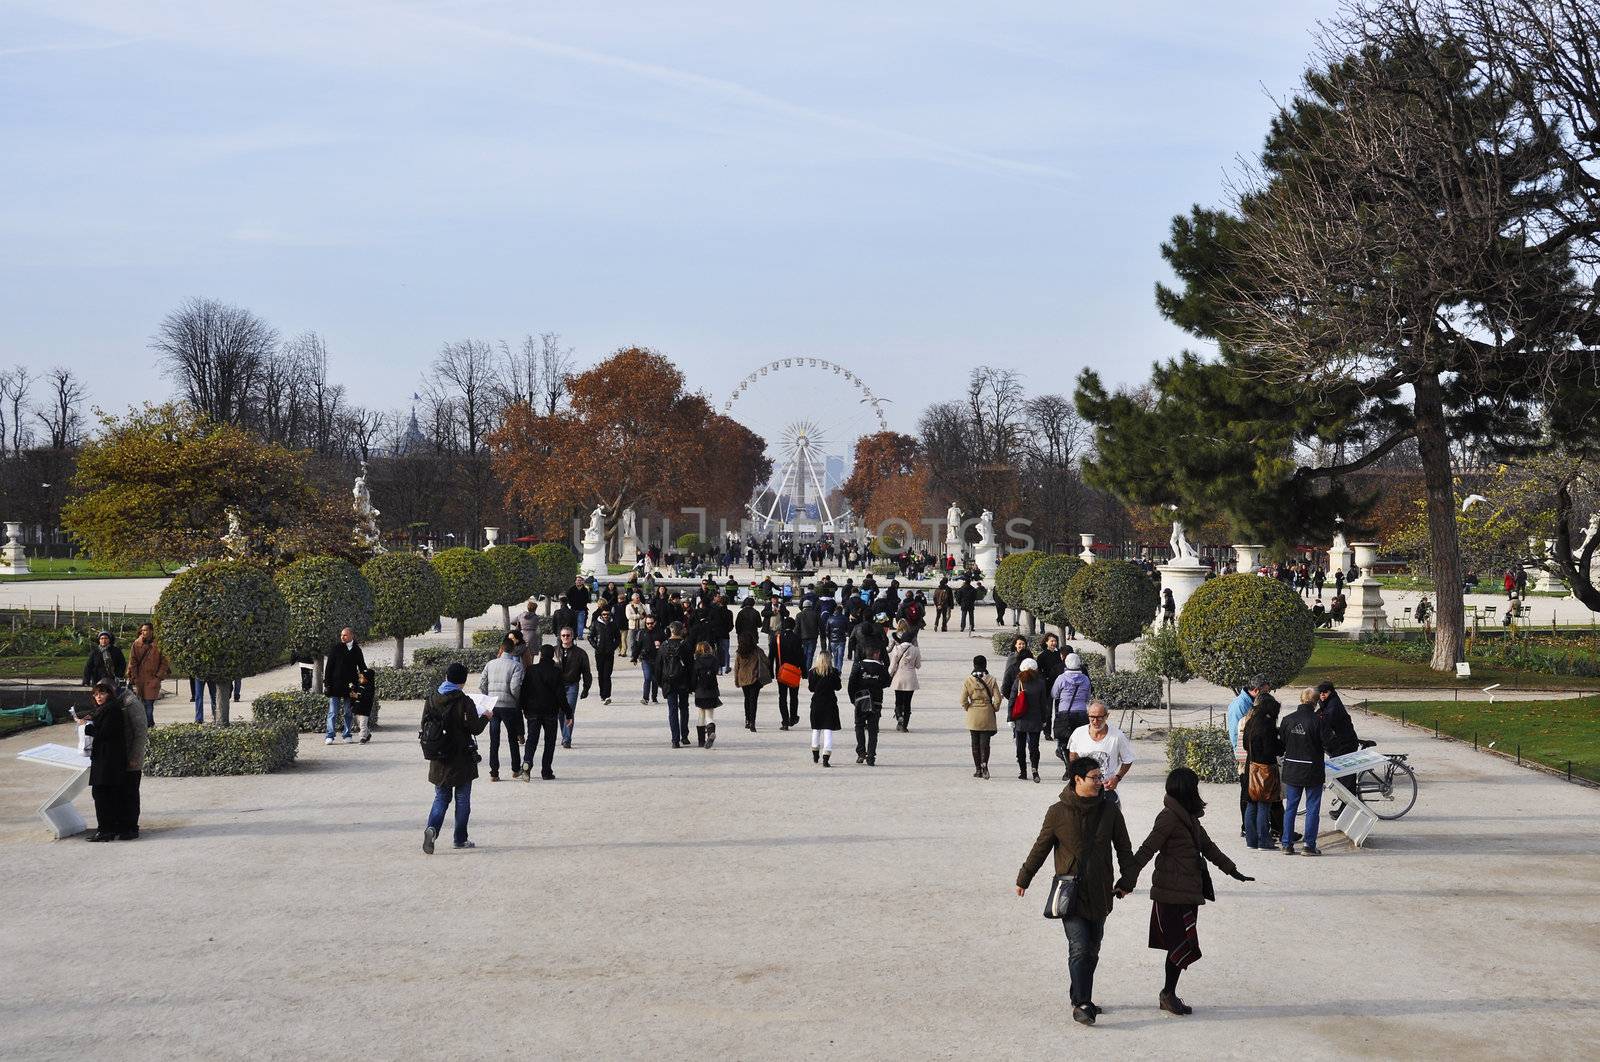 The Tuileries Gardens in Paris, France